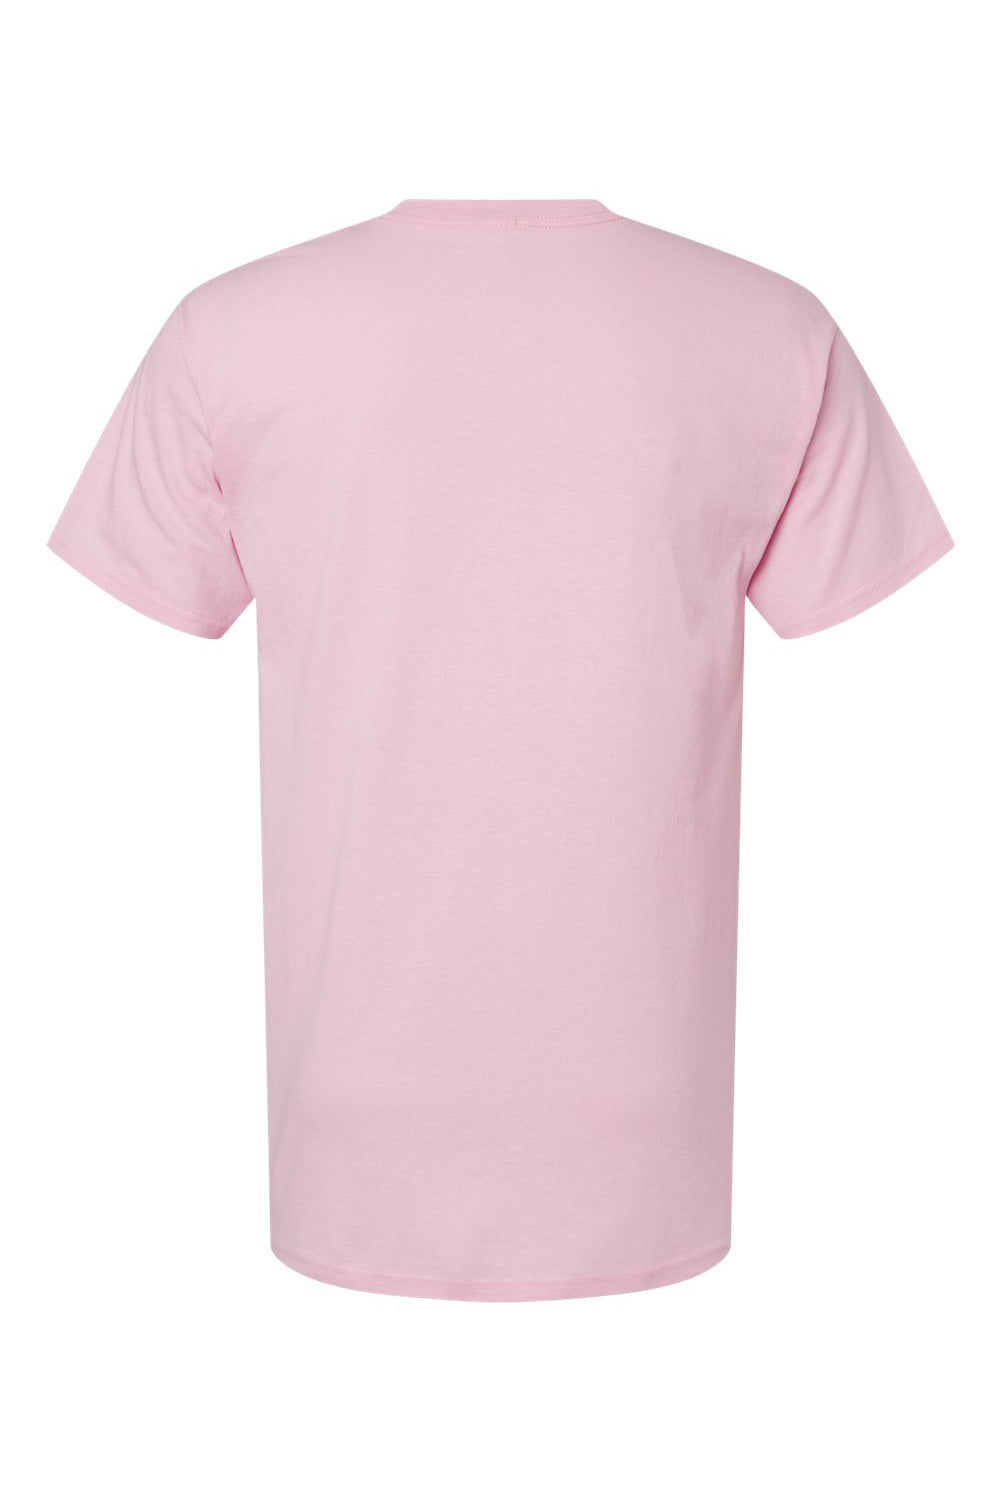 M&O 4800 Mens Gold Soft Touch Short Sleeve Crewneck T-Shirt Light Pink Flat Back